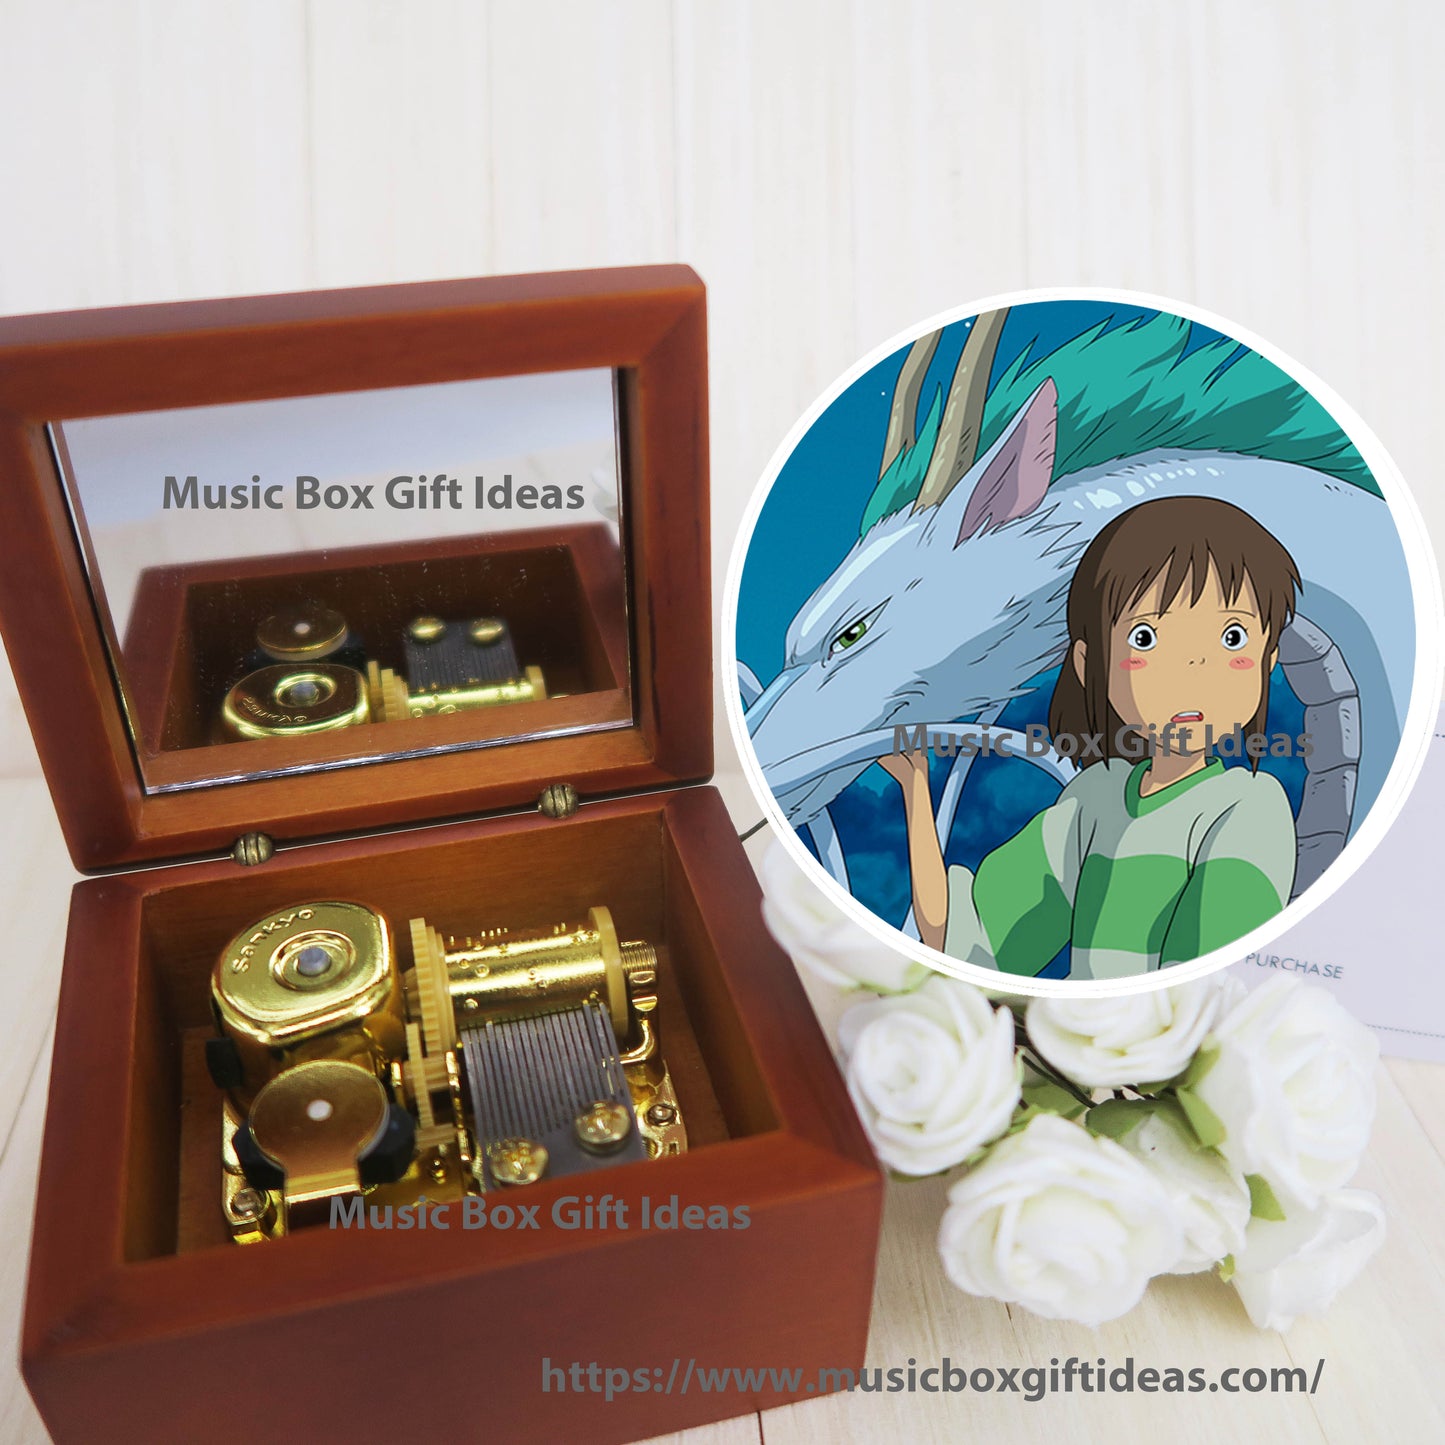 Spirited Away One Summer's Day from Studio Ghibli 18-Note Music Box Gift (Wooden Clockwork) - Music Box Gift Ideas